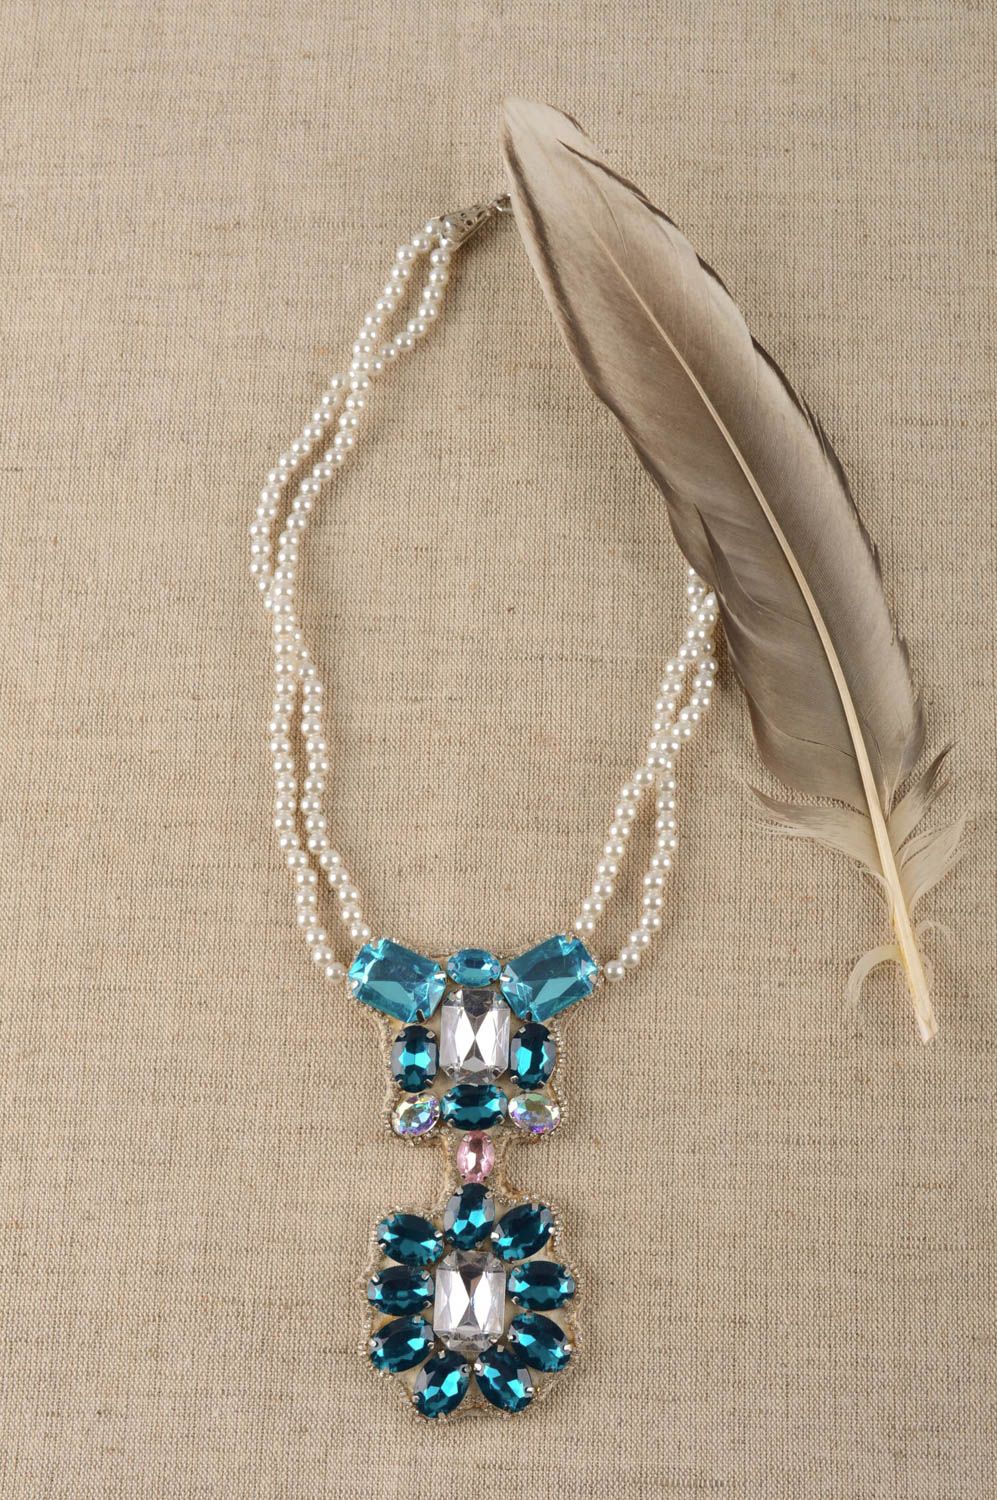 Handmade beaded necklace stylish unusual necklace beautiful accessory photo 1